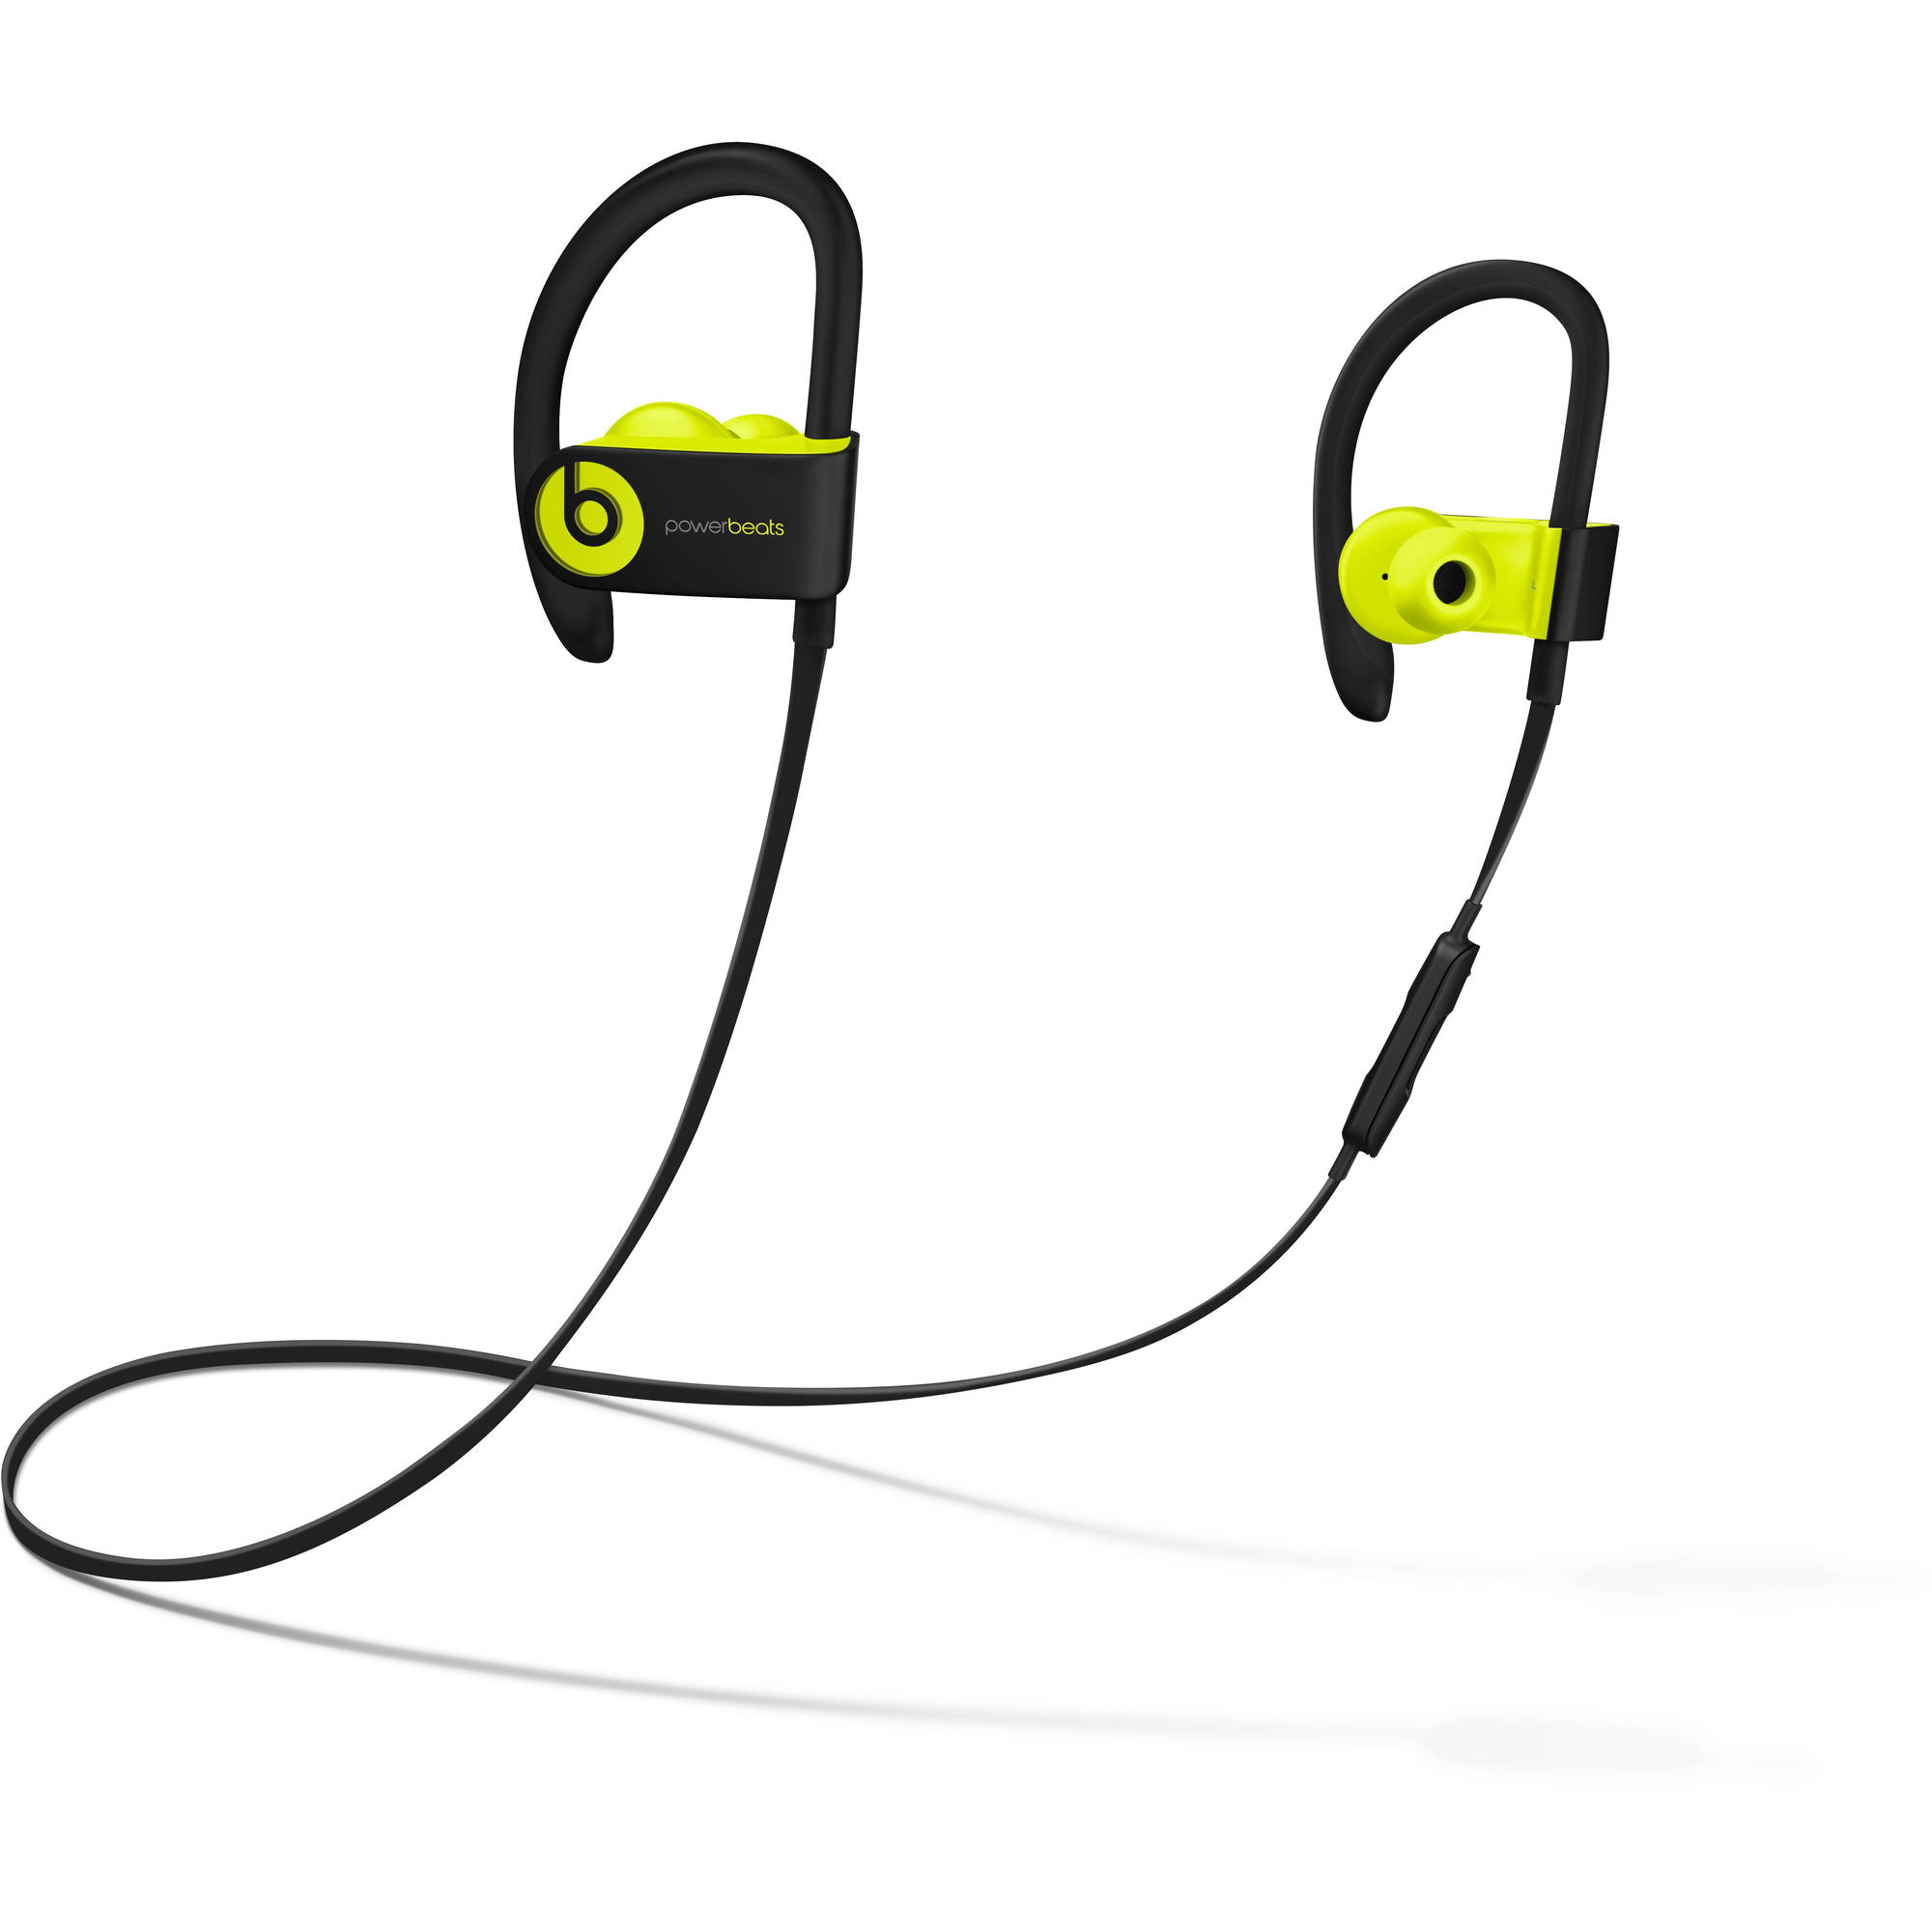 Used Apple Beats Powerbeats3 Wireless Shock Yellow In Ear Headphones MNN02LL/A - image 4 of 6